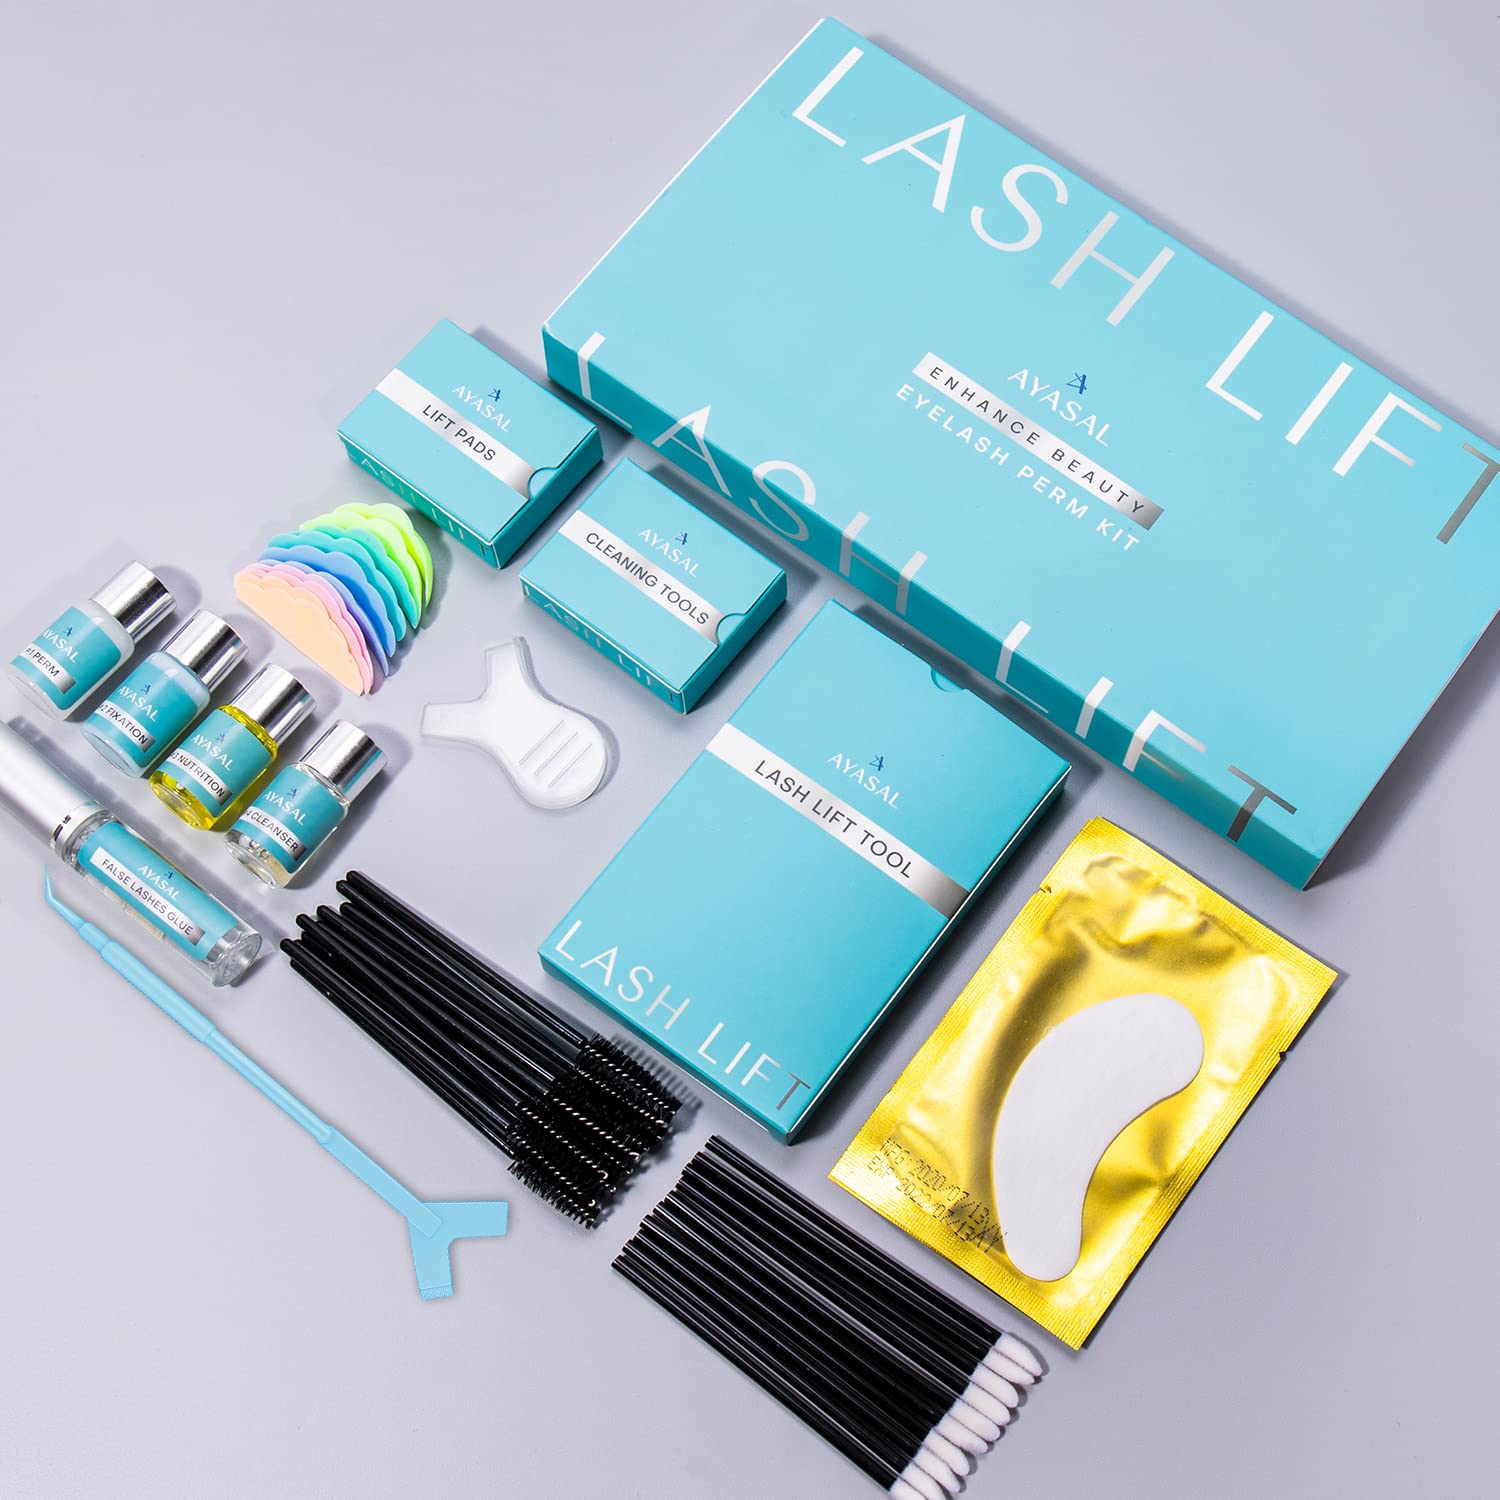 AYASAL Lash Lift Kit Eyelash Perm Kit, With Detailed Instruction Eyelash Lift Kit, Easy for Beginner and Professional Lash Perm Kit, Achieve Salon-Quality Lashes Lift with Safe and Effective Result